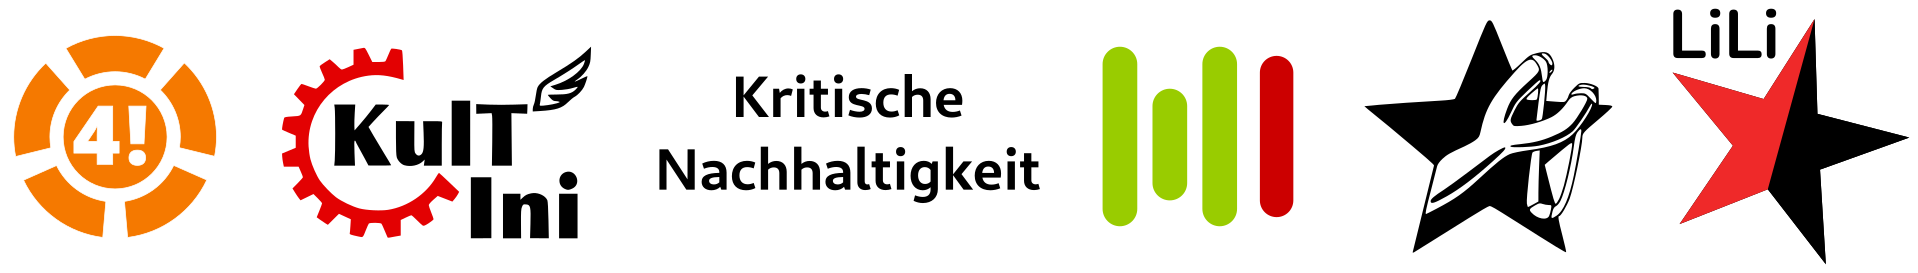 Logos of the student initiatives Freitagsrunde, KulT-Ini, Kritische Nachhaltigkeit, MInitiative, Zwille and Lili